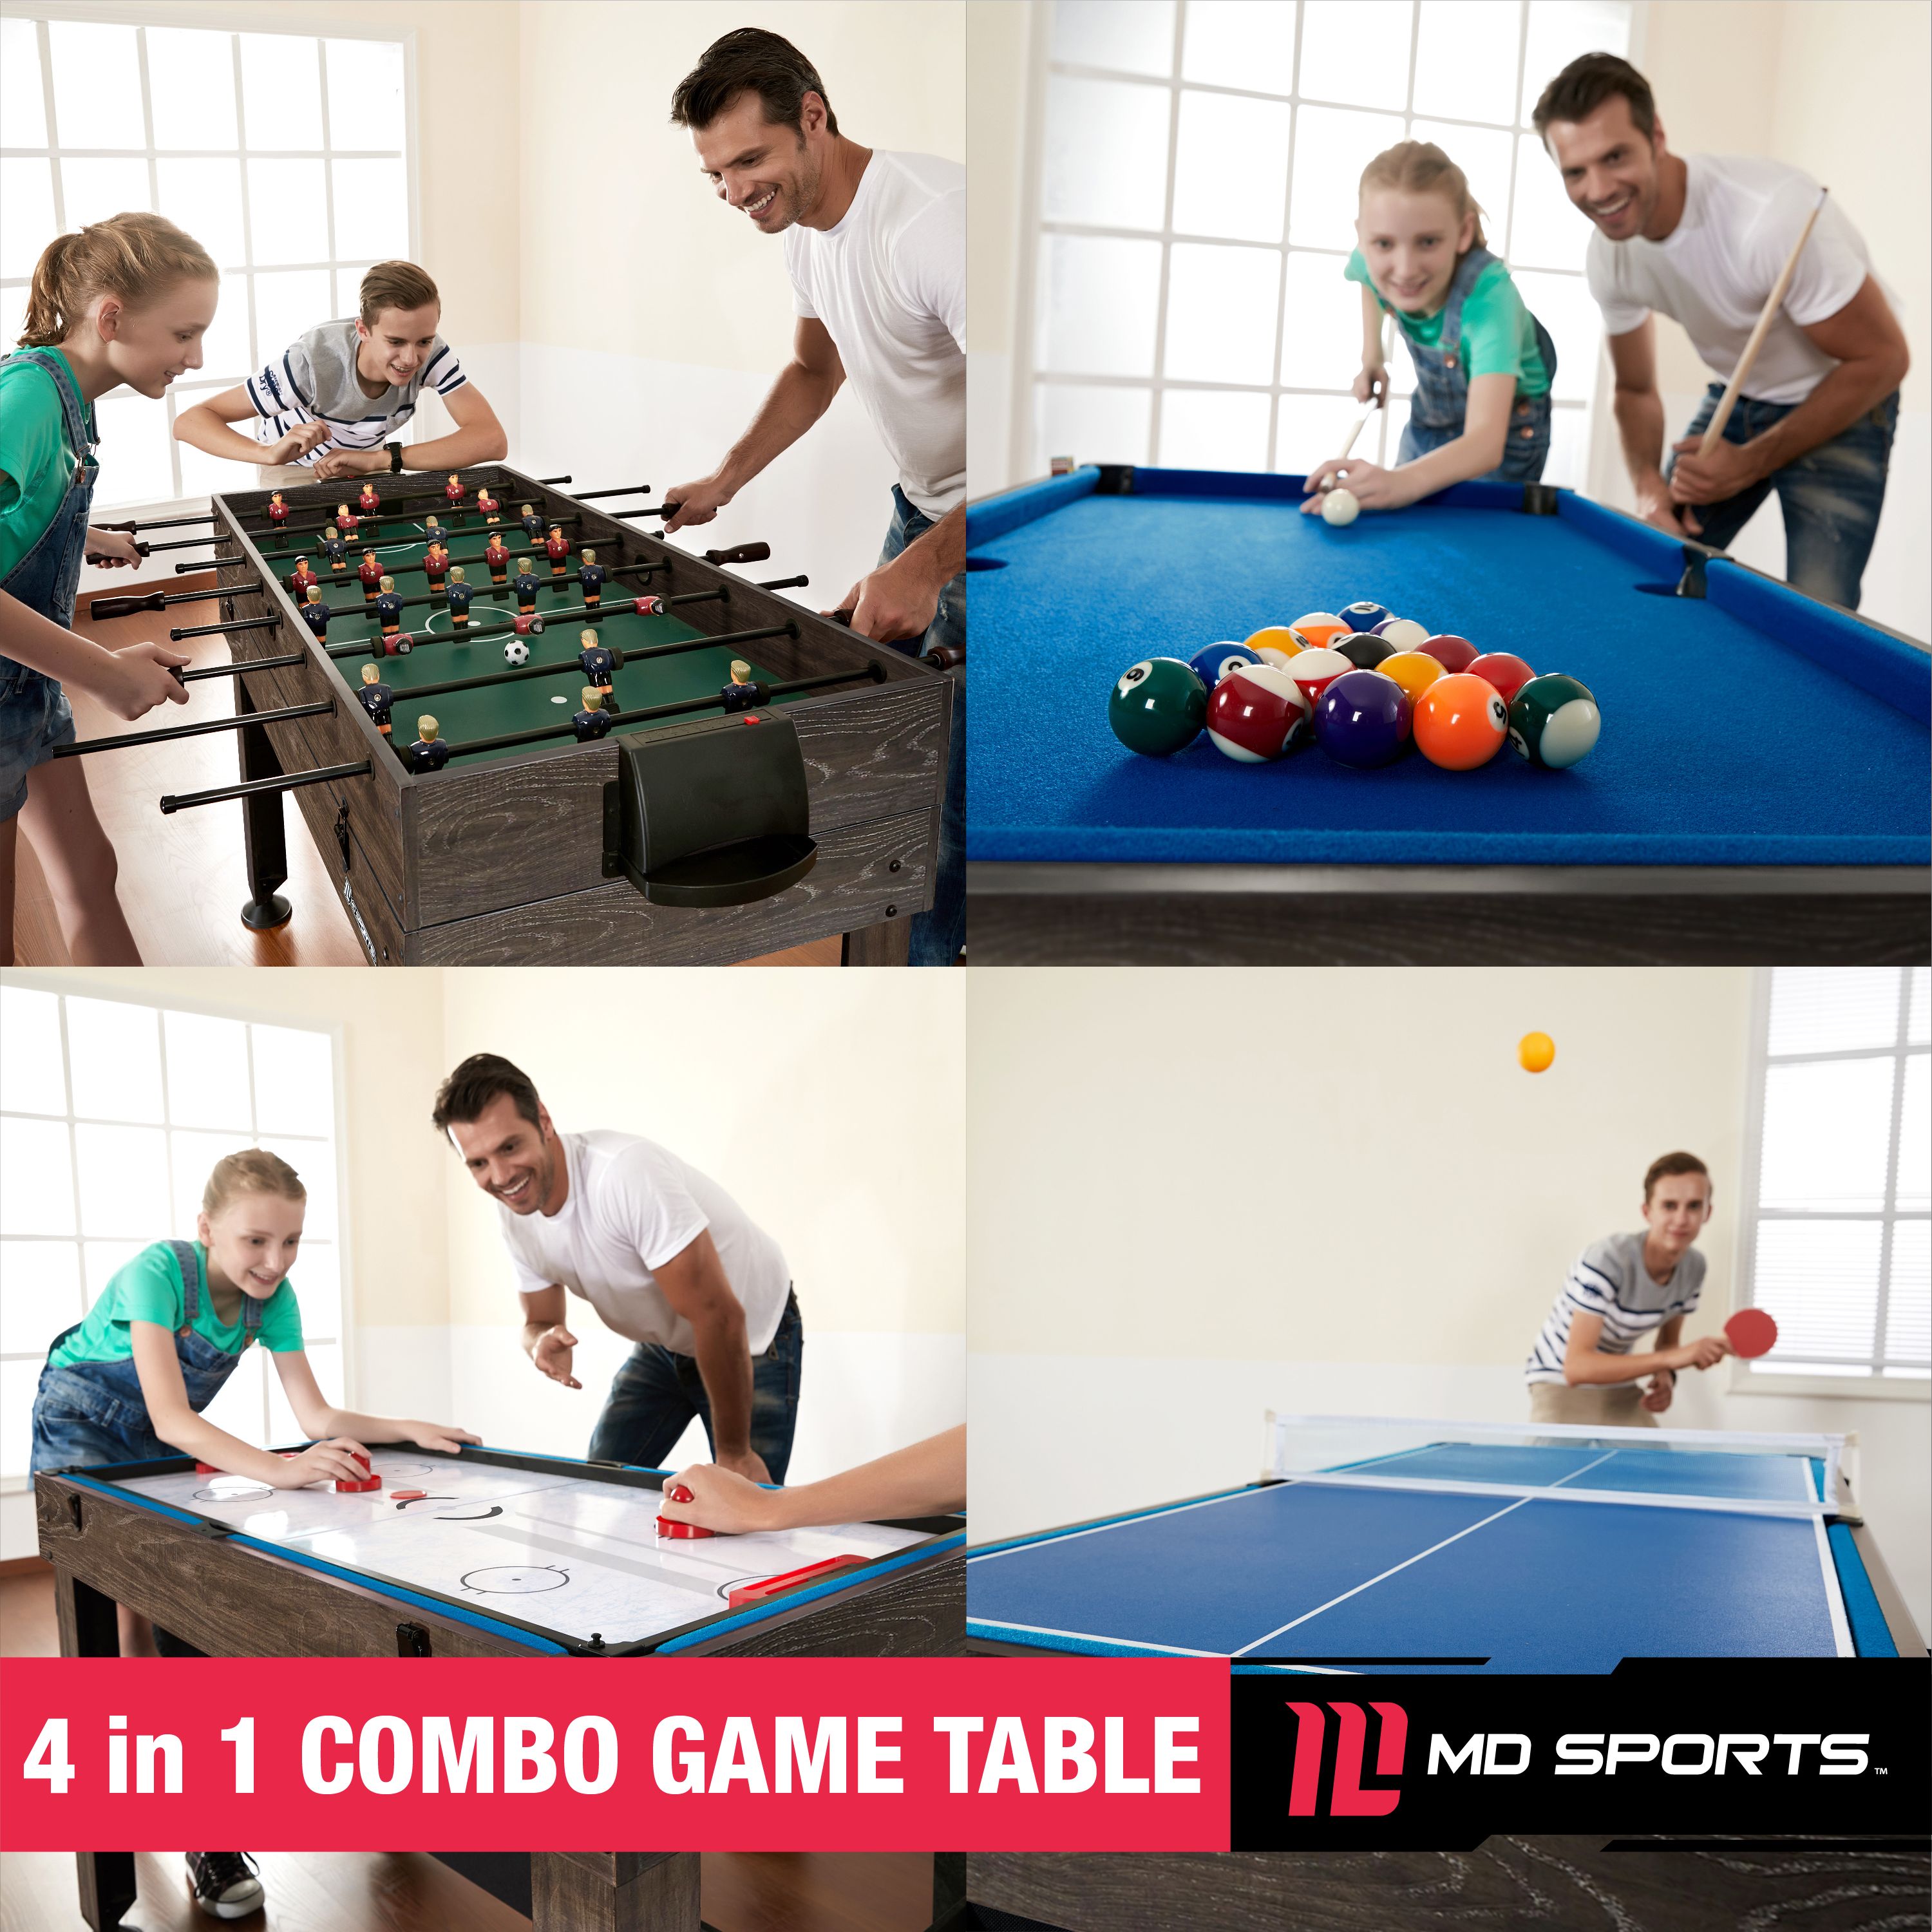 MD Sports 54" 4 in 1 Foosball, Slide Hockey, Table Tennis, Pool Game Table - image 3 of 6